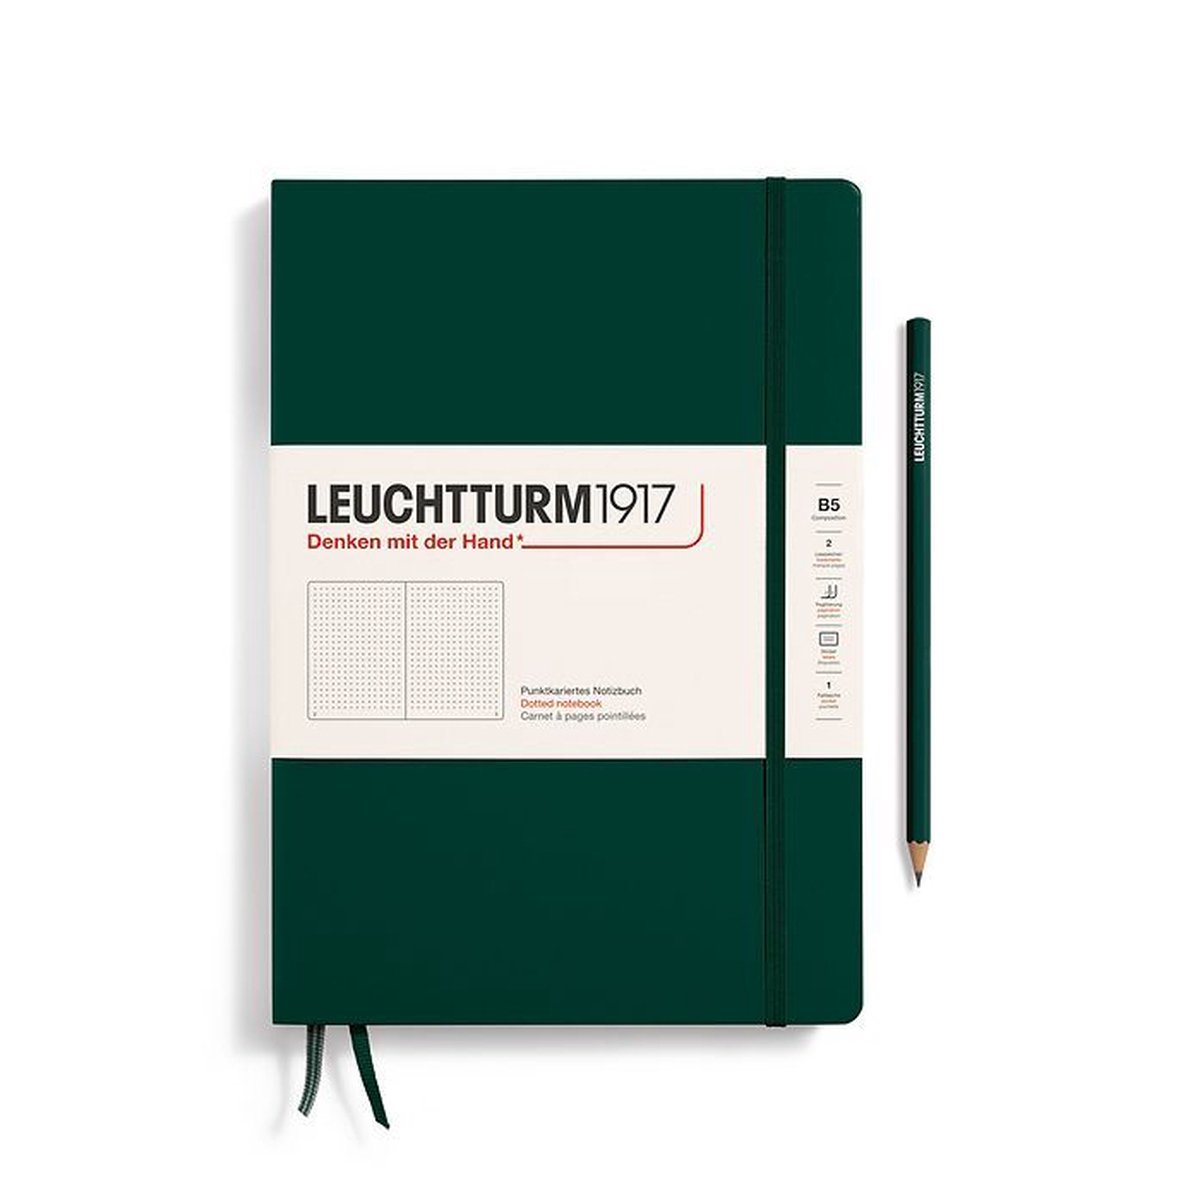 Leuchtturm notitieboek forest green dotted composition hardcover b5 178x254mm